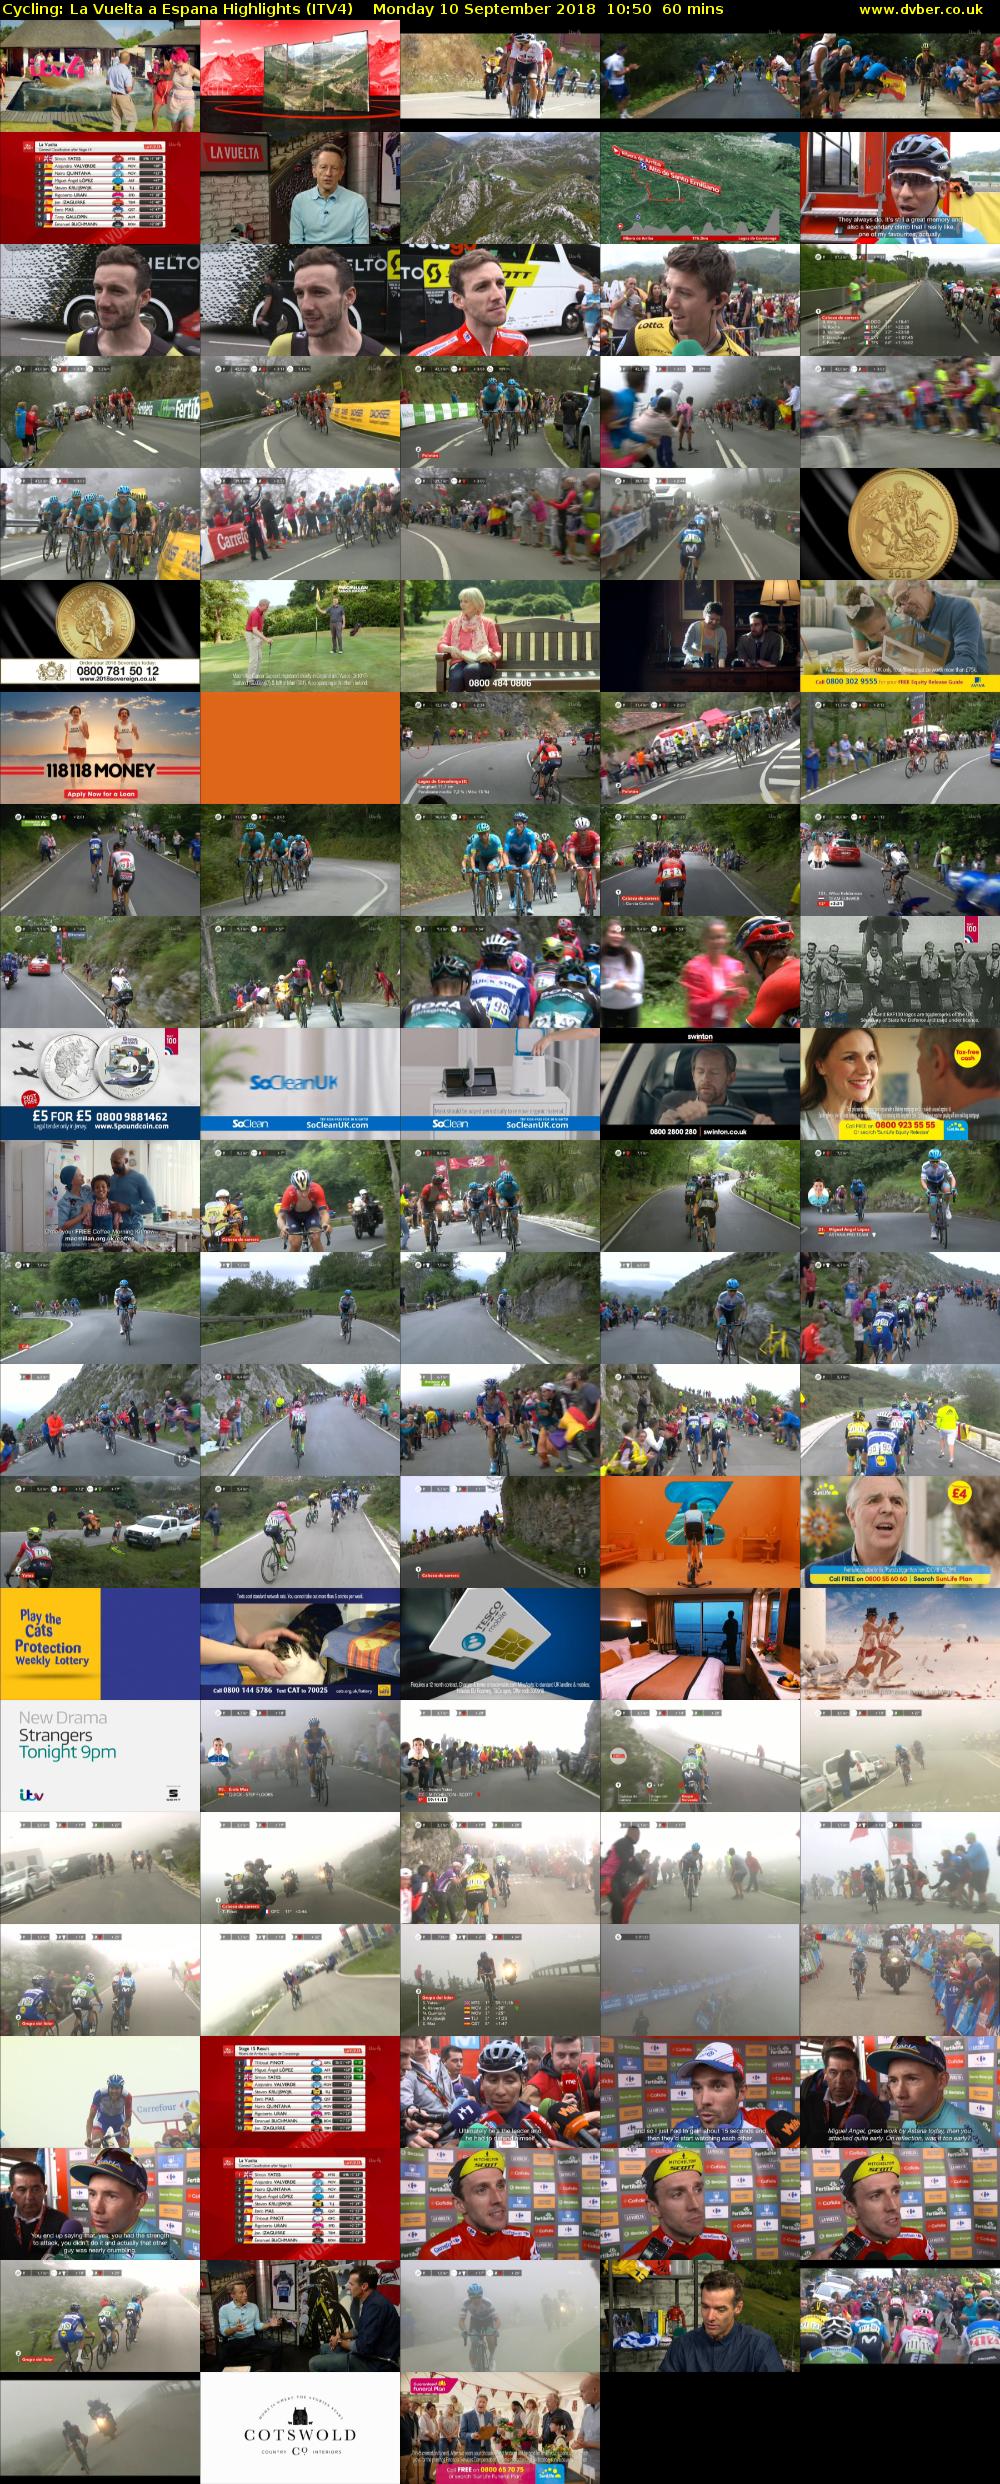 Cycling: La Vuelta a Espana Highlights (ITV4) Monday 10 September 2018 10:50 - 11:50